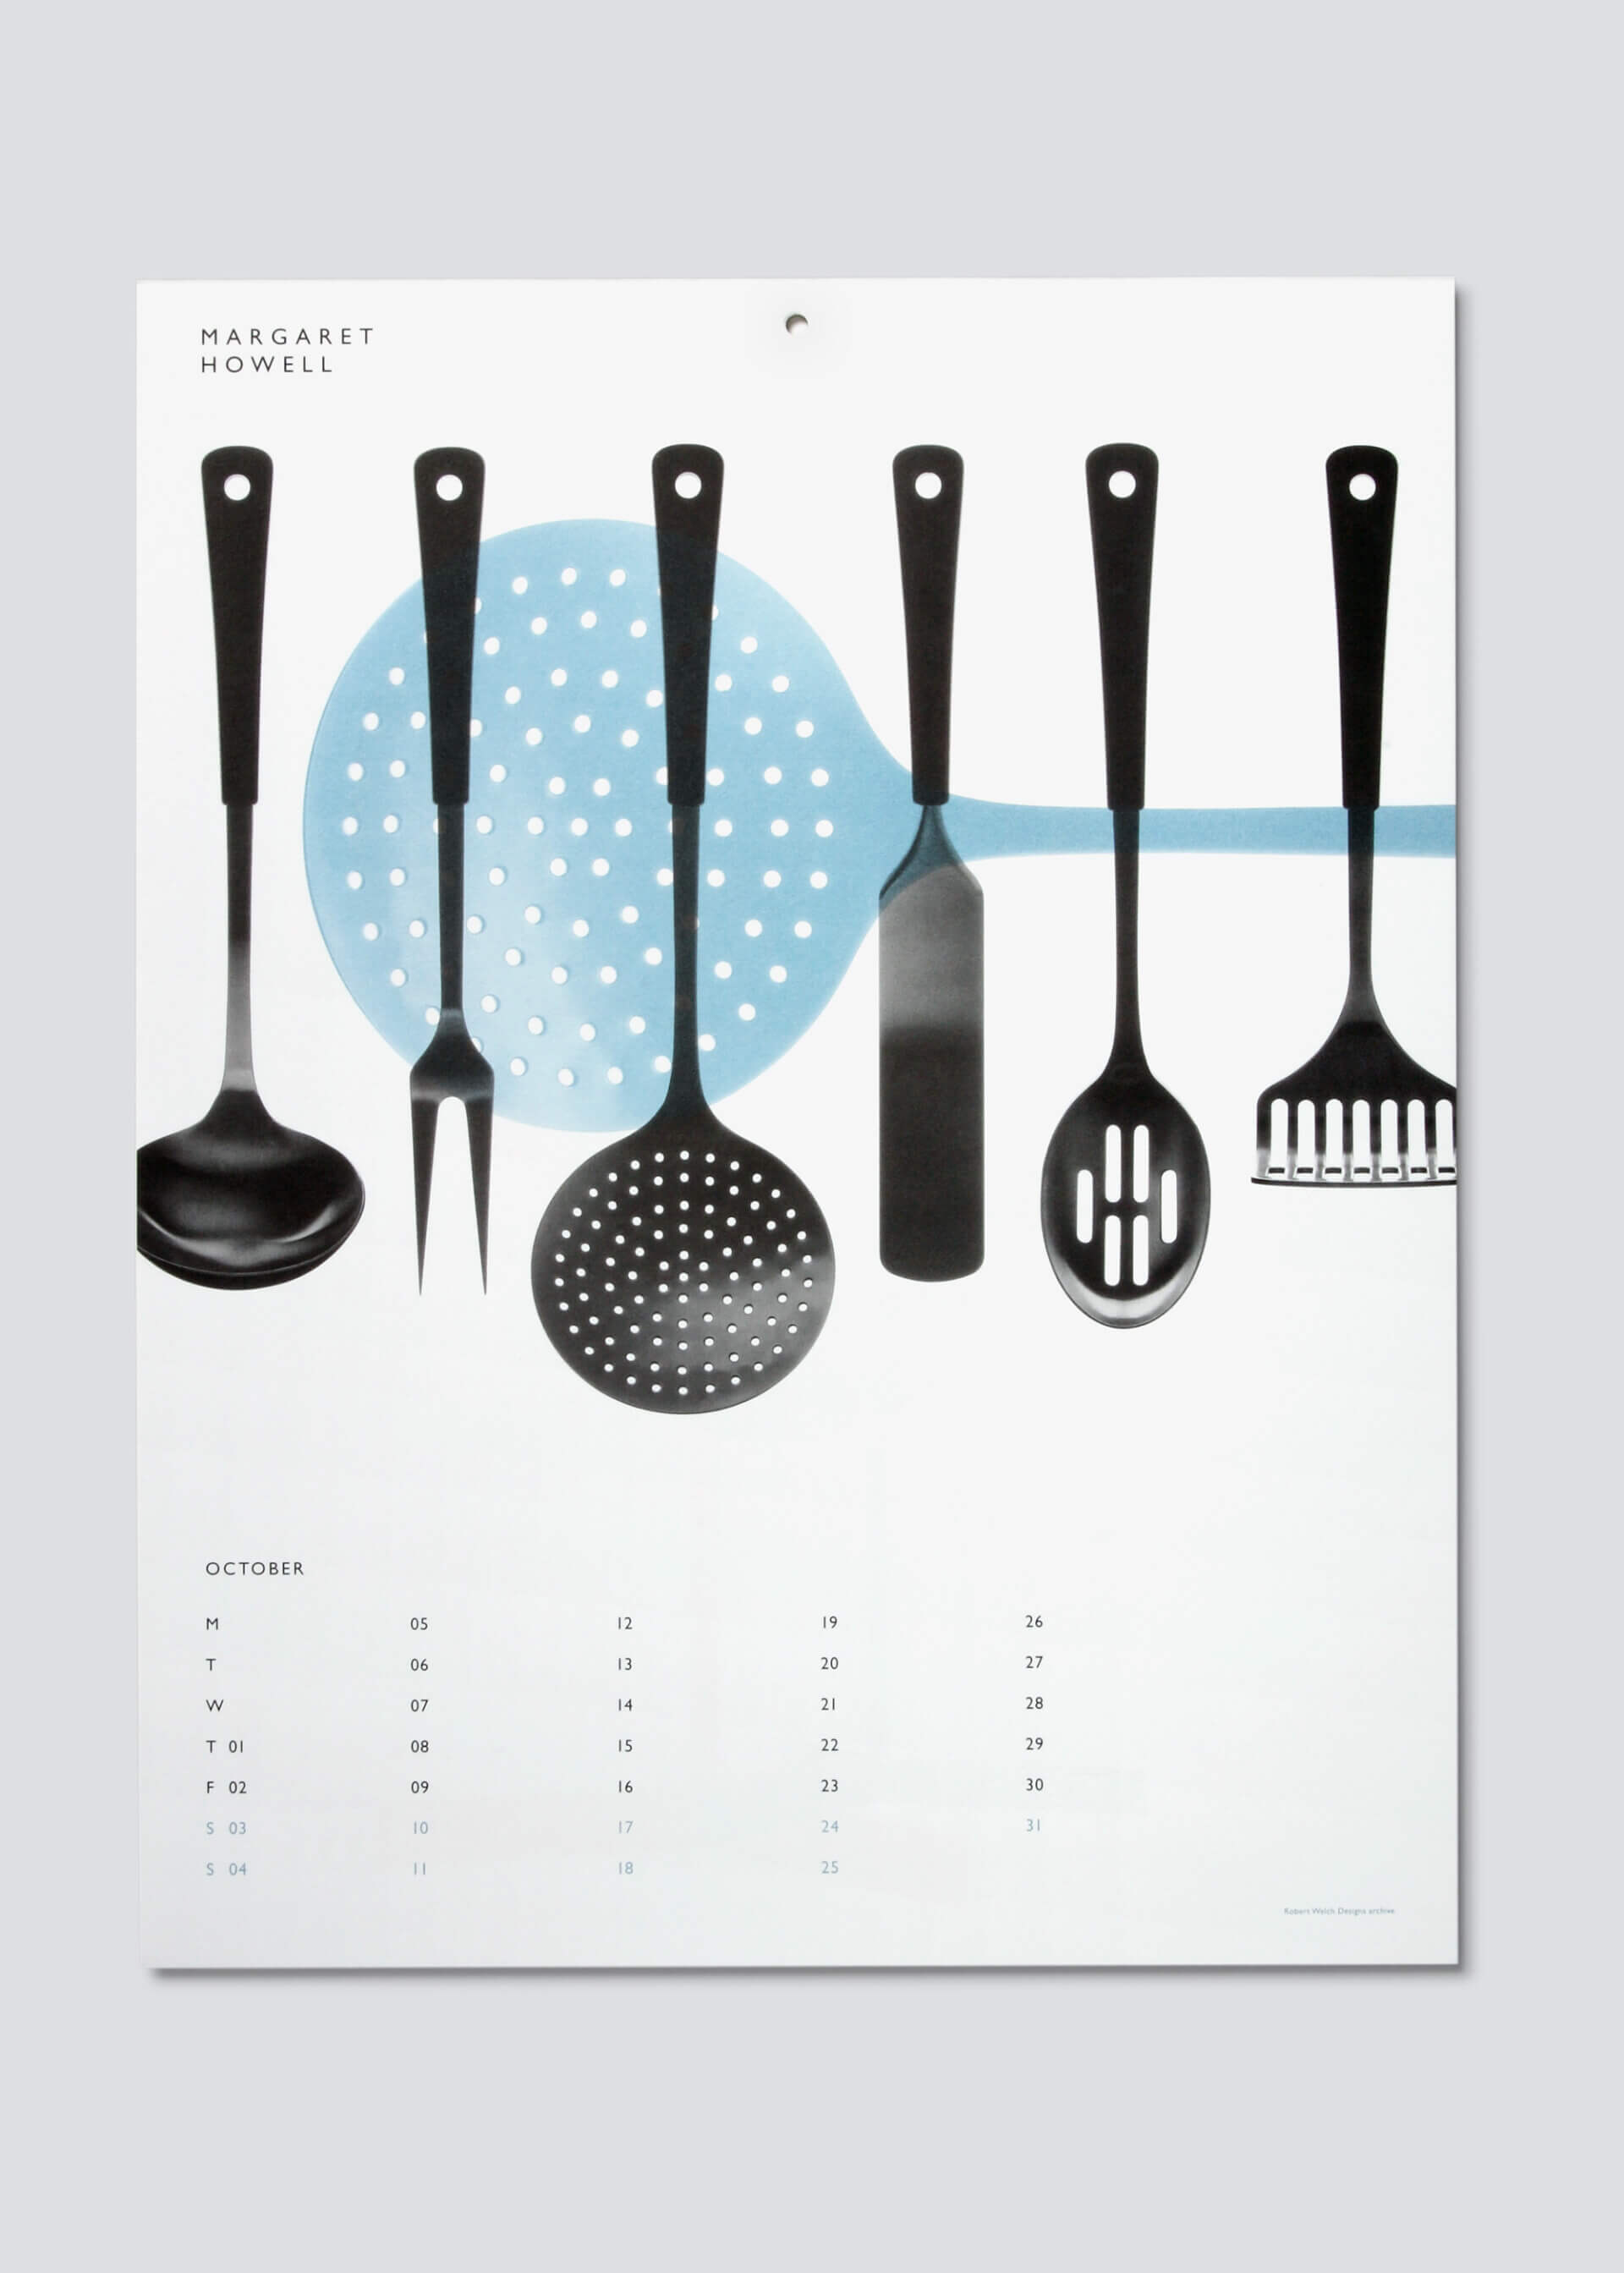 Margaret Howell 2009 Calendar Design Modern British Design Robert Welsh Cooking Utencils